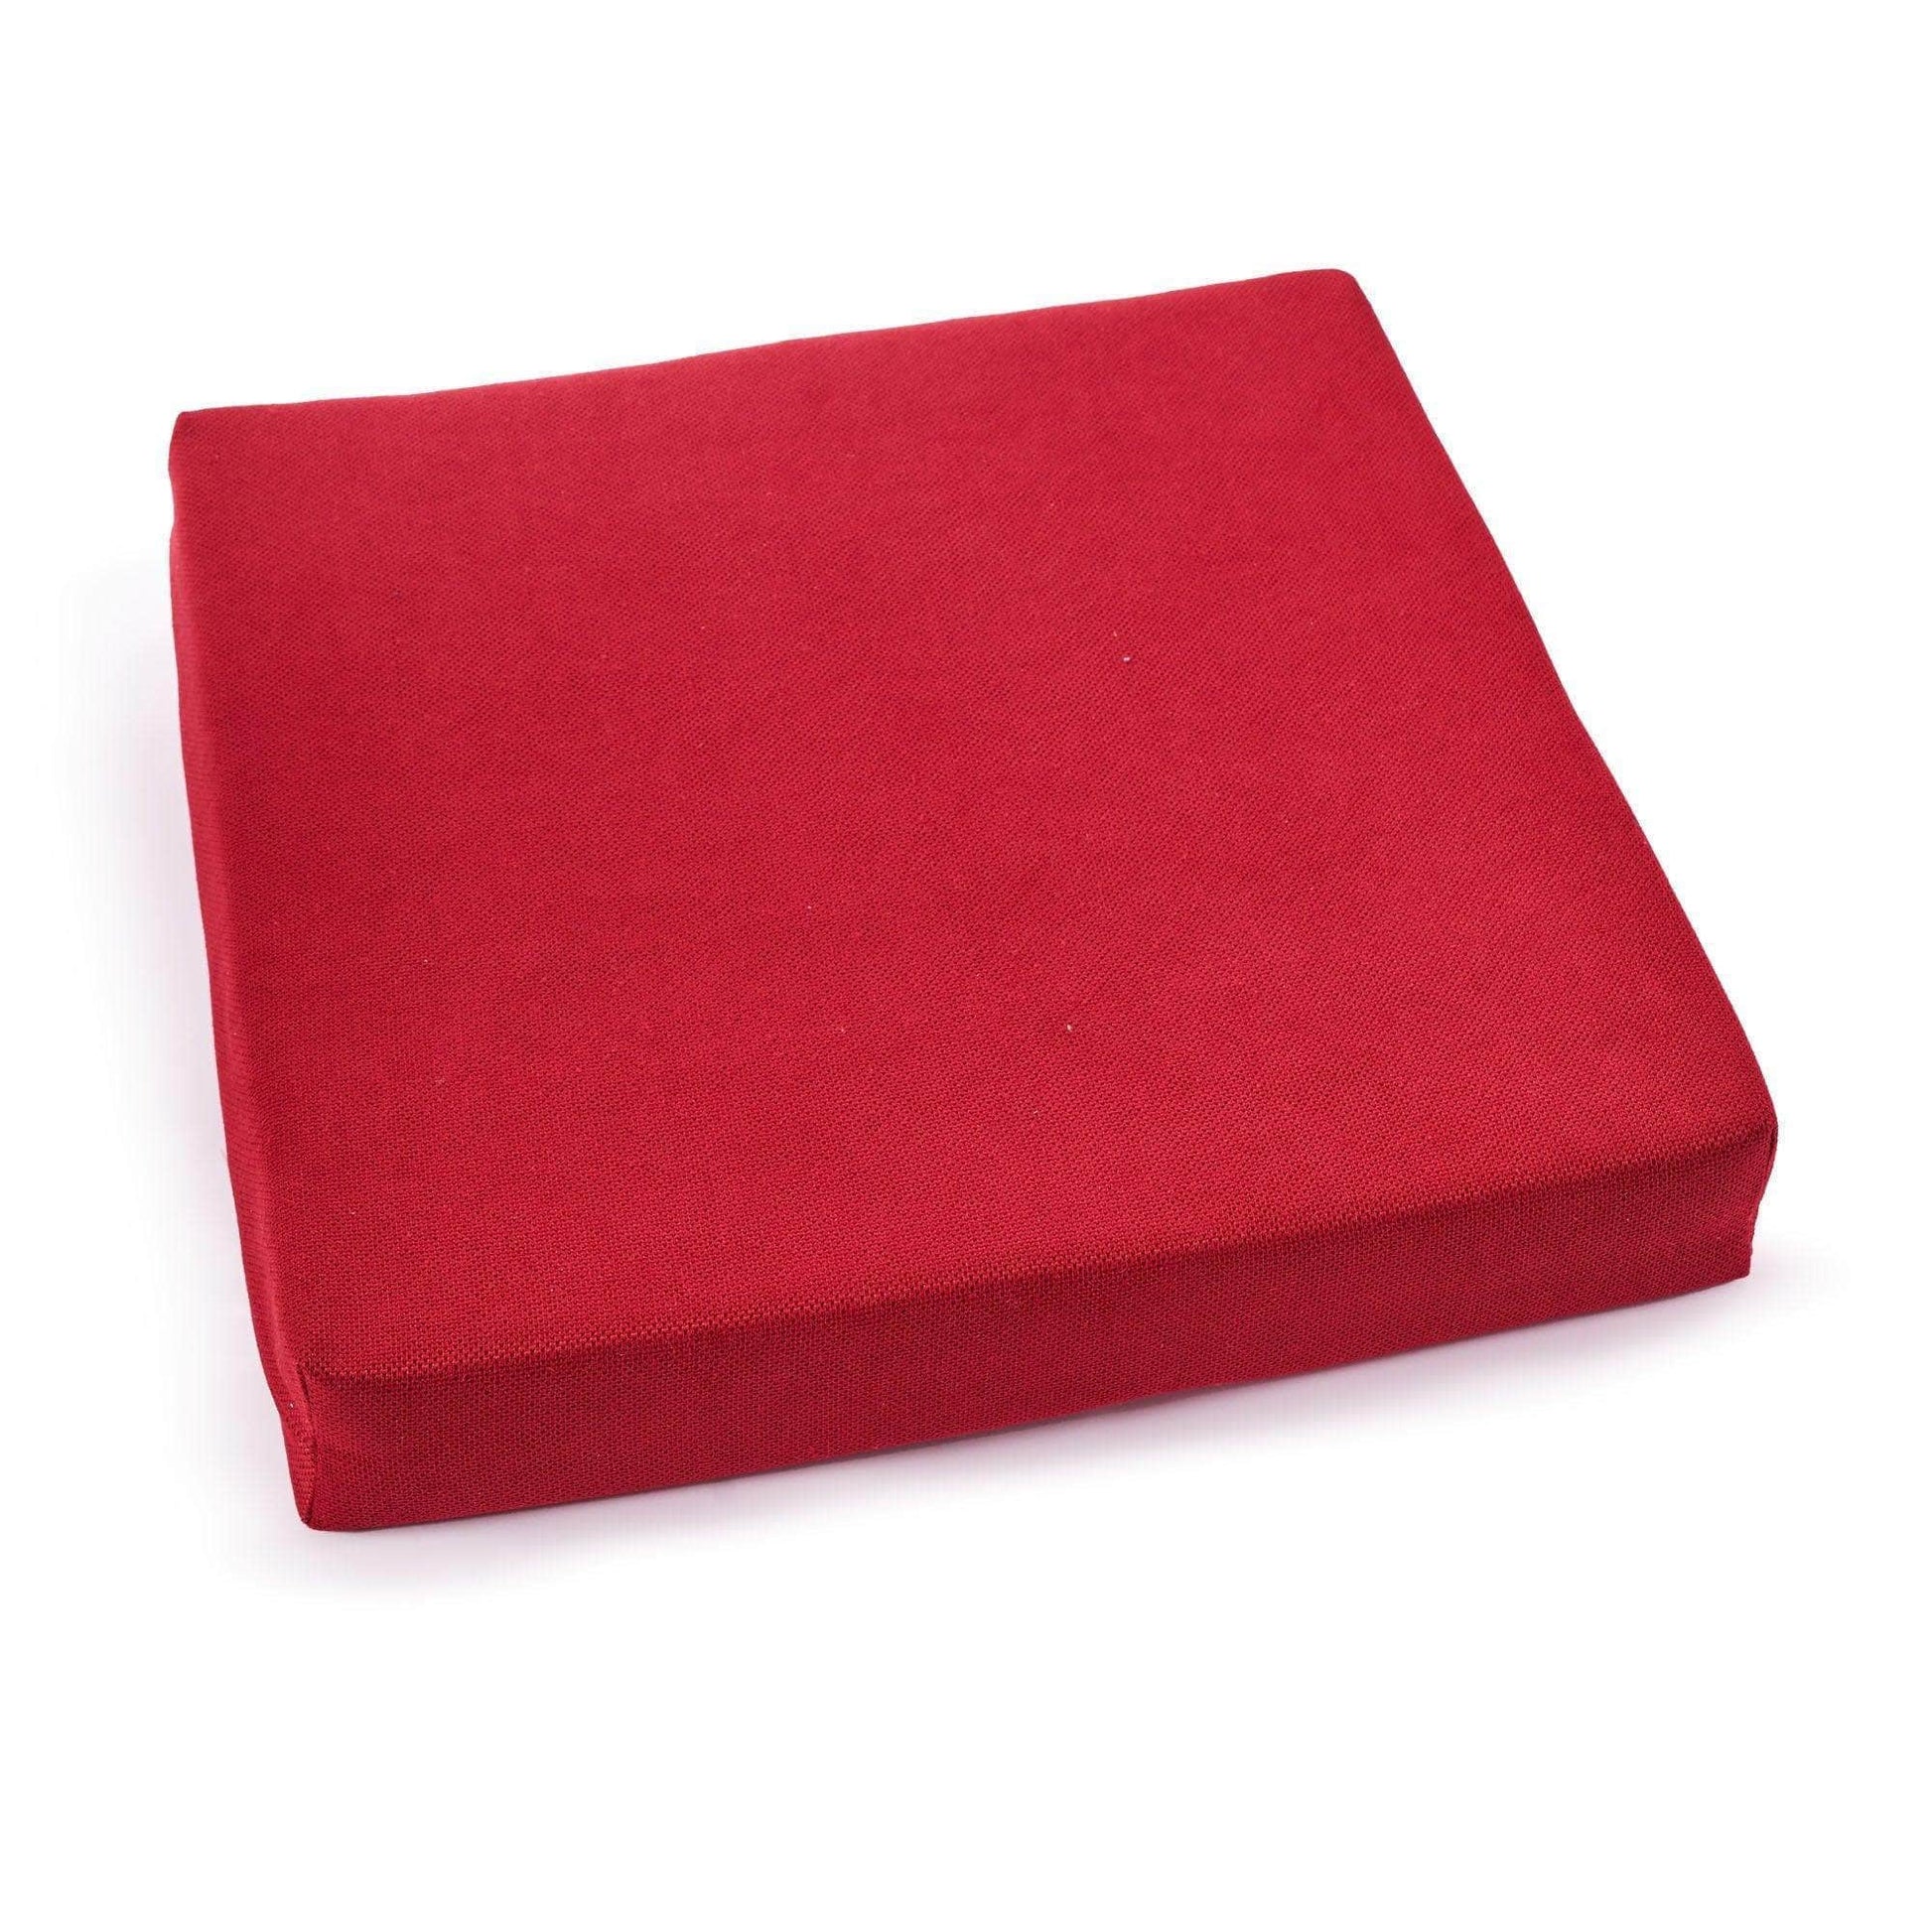 Penguin Group Cushions Darkred Square Sponge Cushion 50×52×8 cm